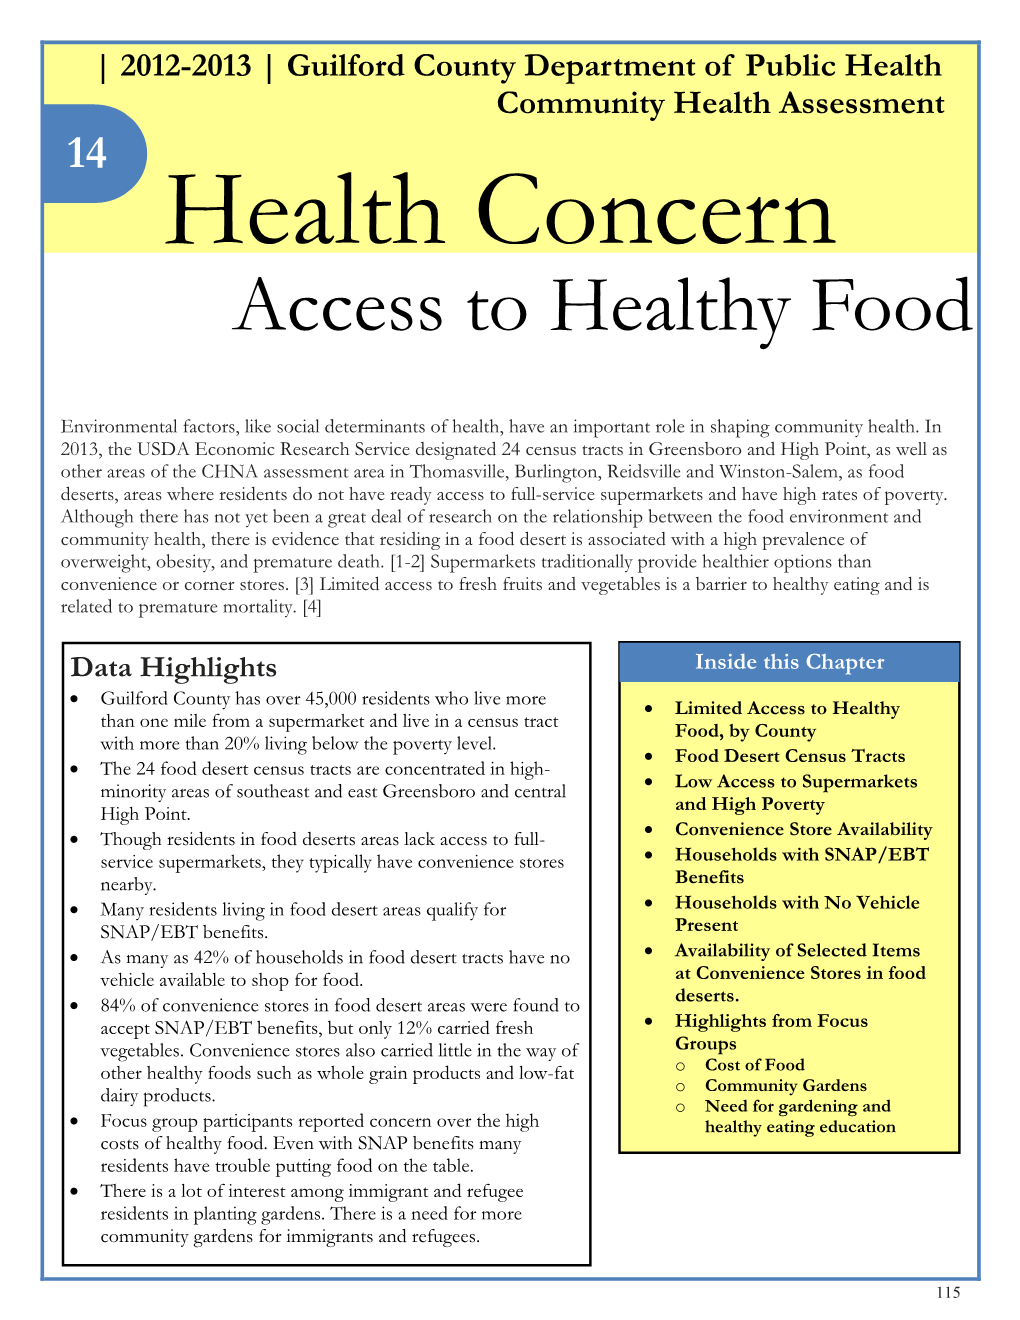 Health Concern Access to Healthy Food